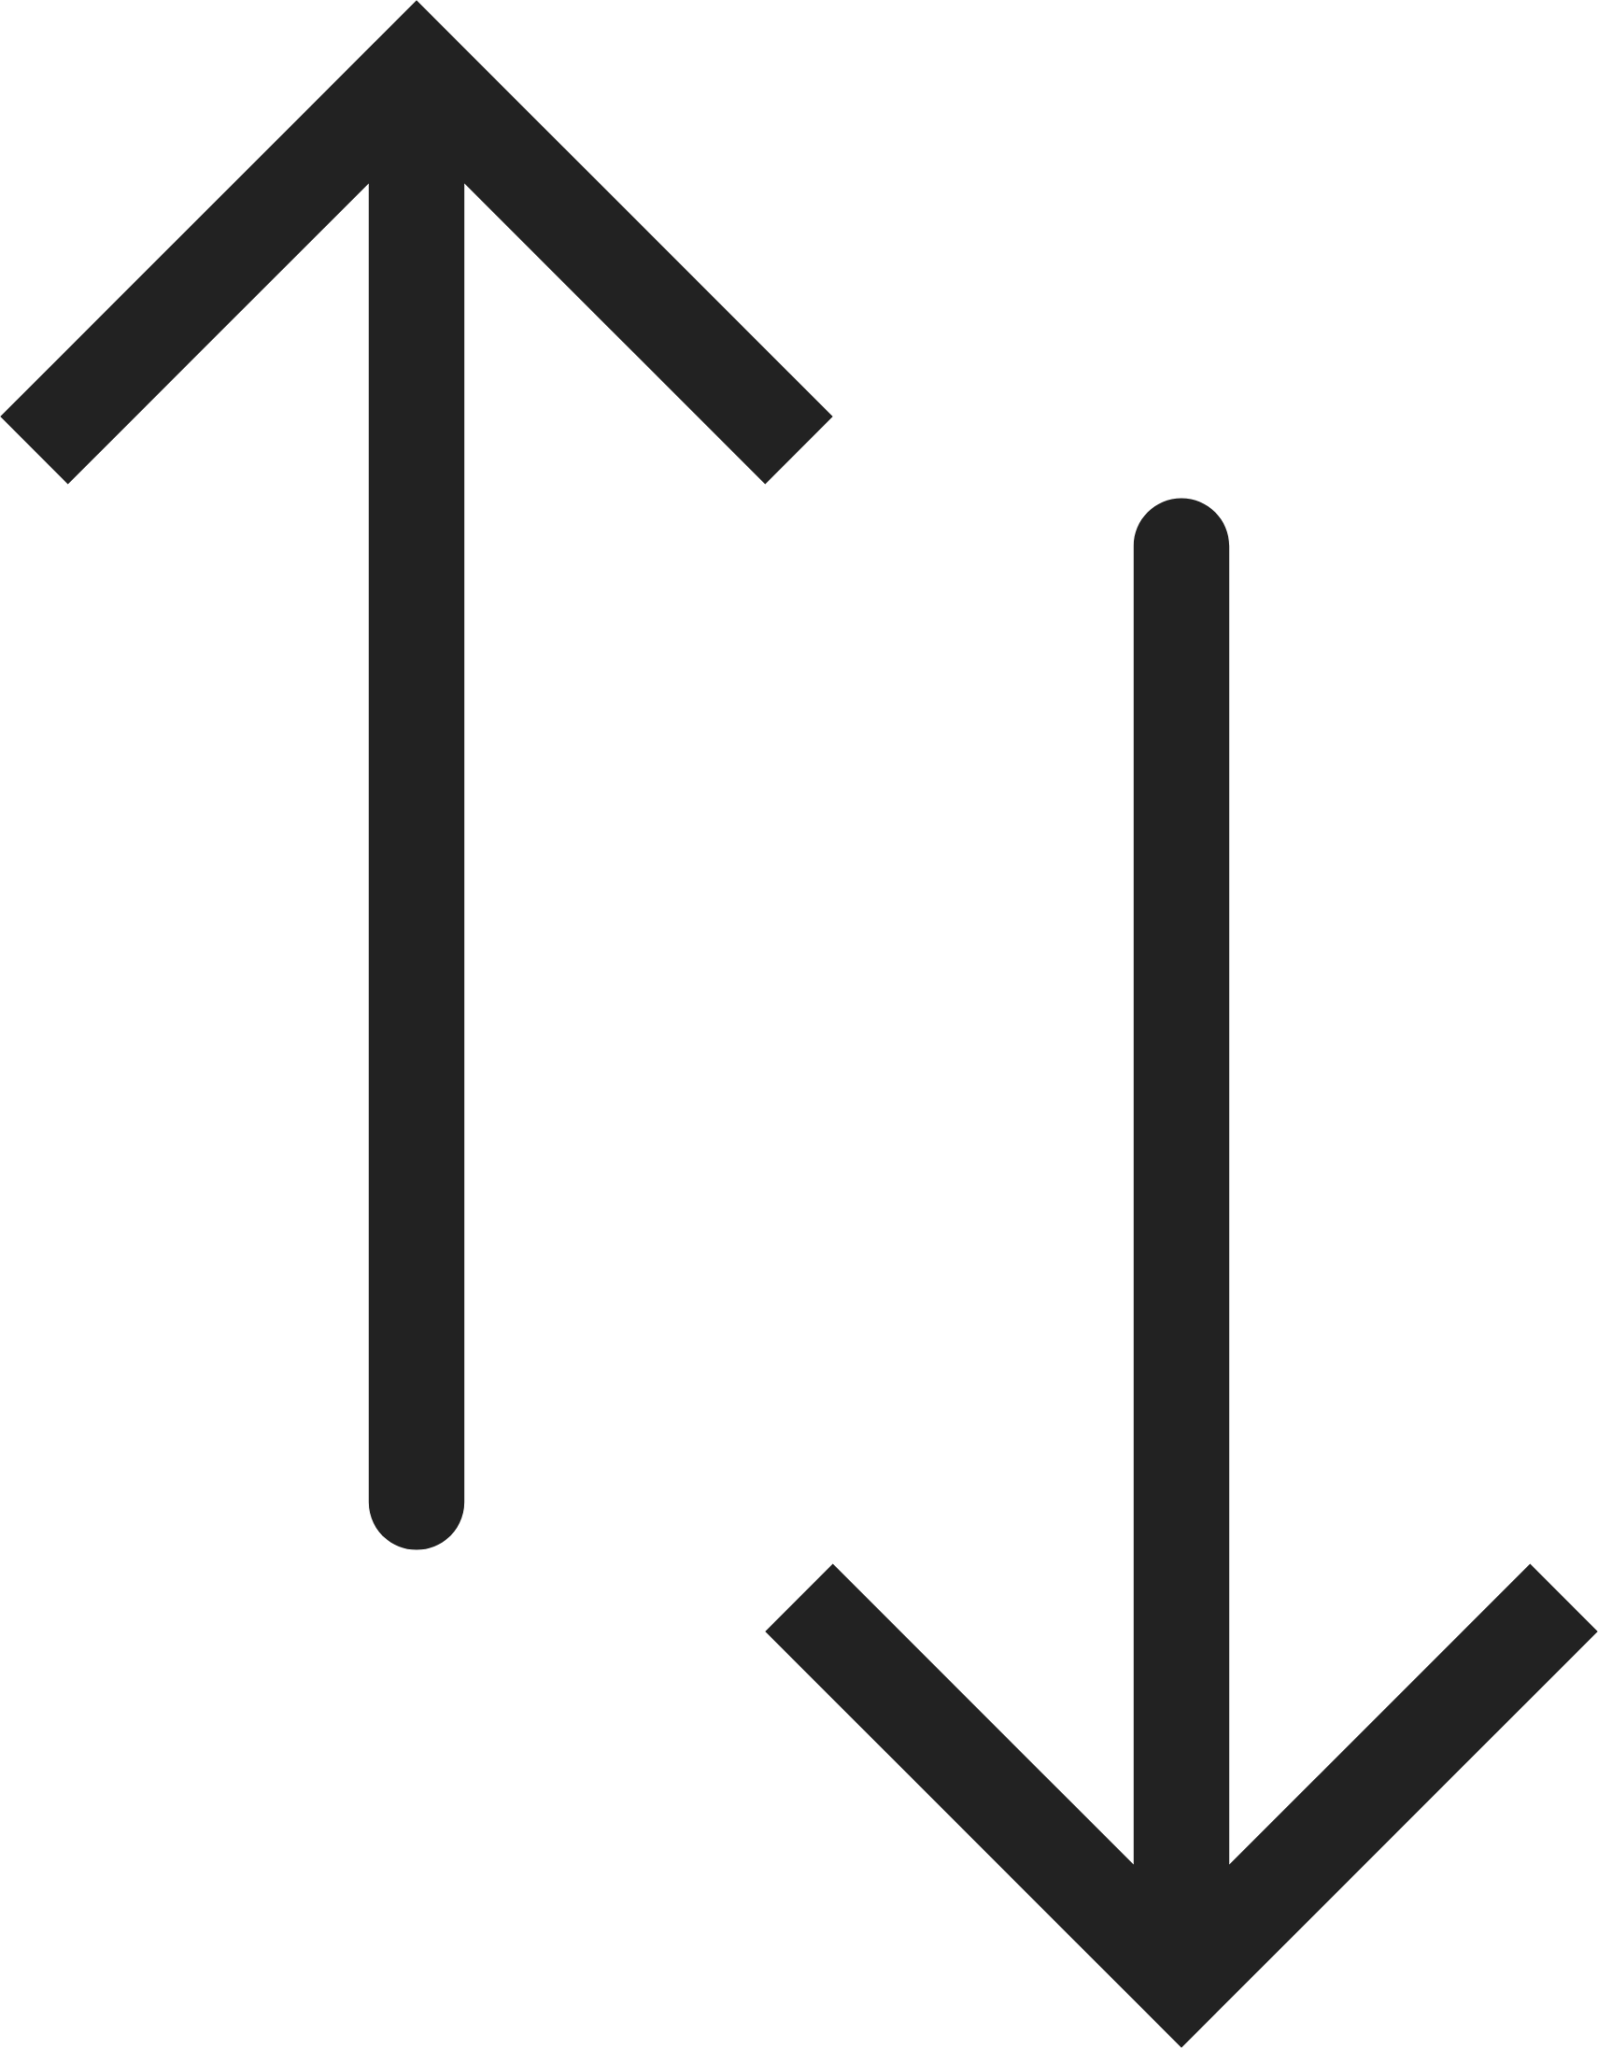 Sort arrow light icon